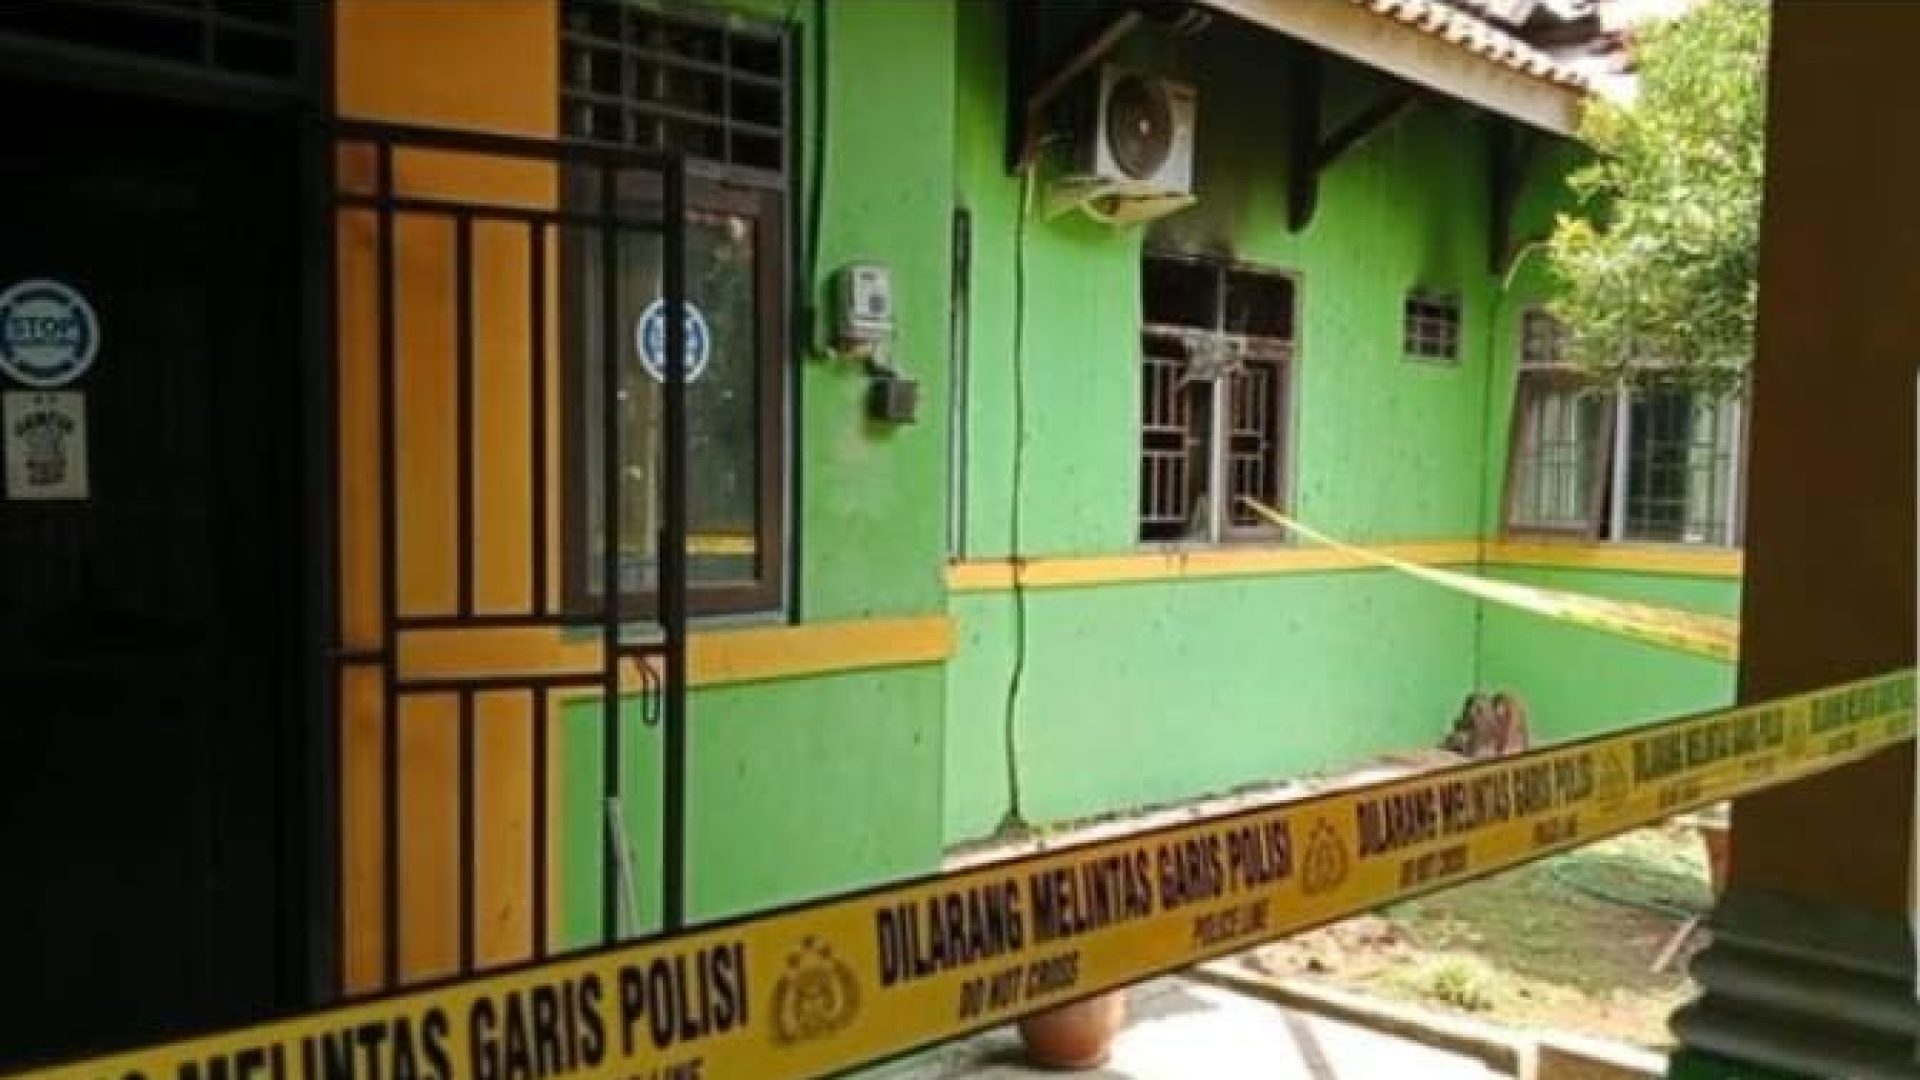 LOKASI KEBAKARAN: Kantor Camat di Kabupaten Batang yang terbakar diberi garis polisi. (Aidin/Mediaseruni)